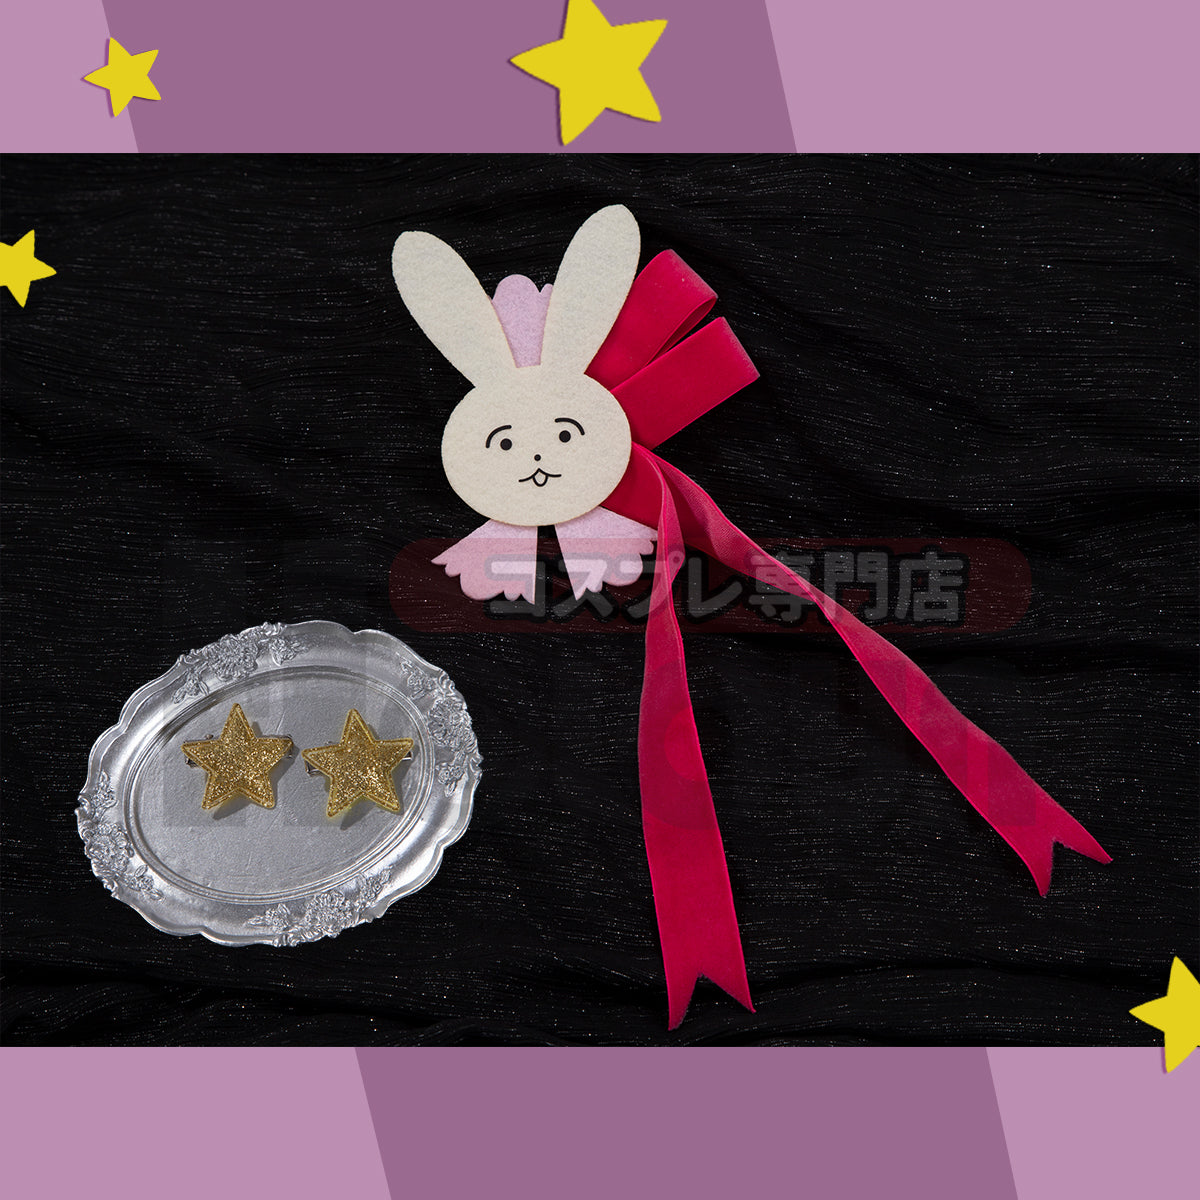 HOLOUN OSHI NO KO Anime Ai Hoshino Cosplay Costume Wig Lolita Dress Stage Skirt Bunny Hairpin Rose Net Sythetic Party Outfit